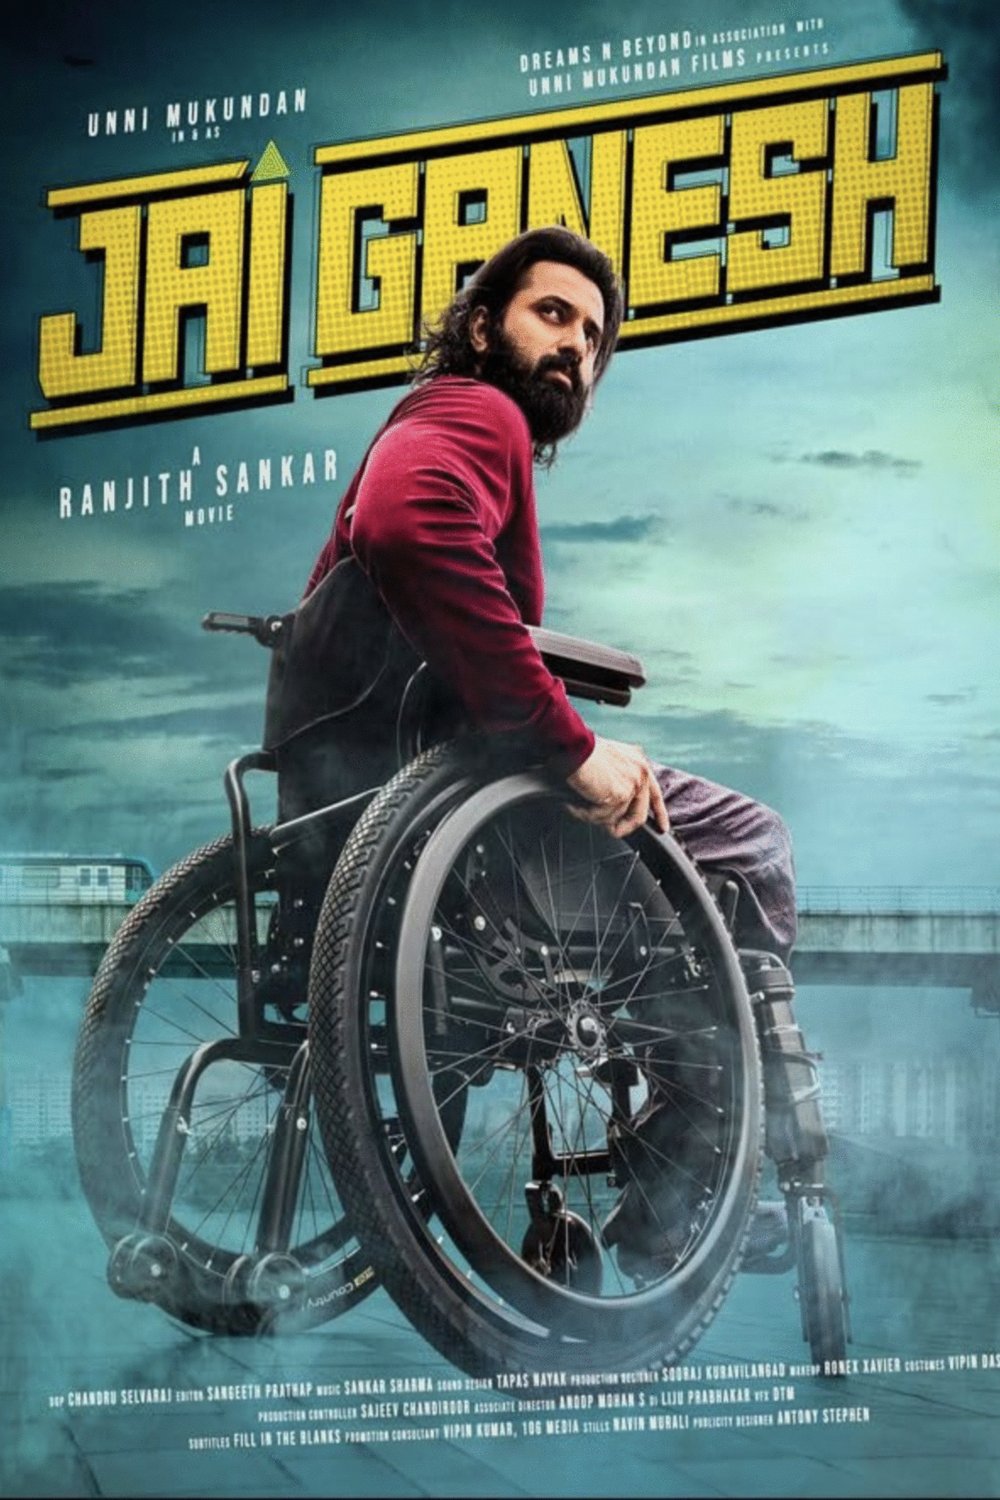 Malayalam poster of the movie Jai Ganesh